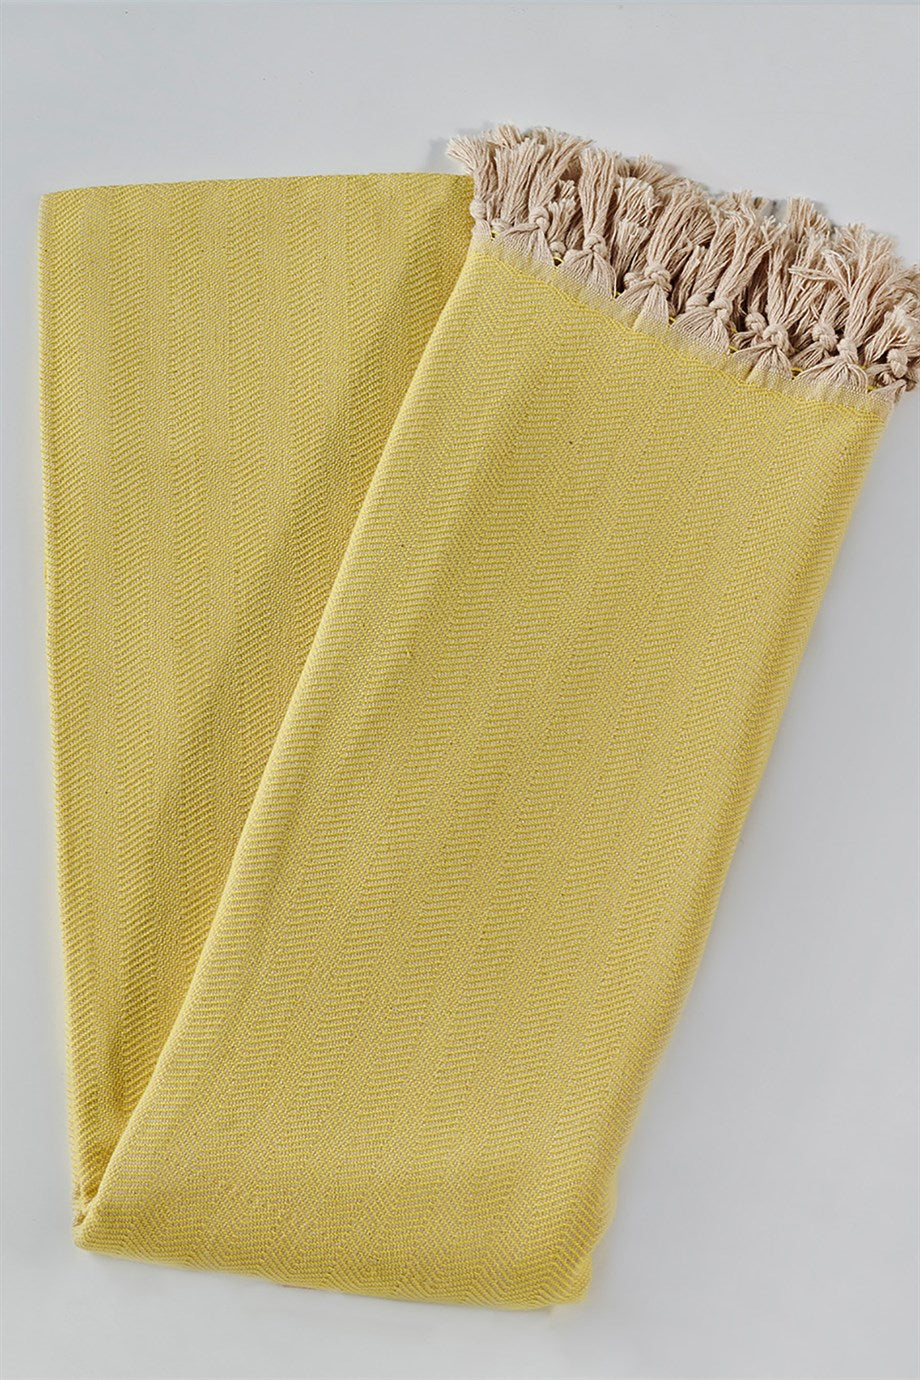 DENIZLI CONCEPT Herringbone Double Yellow Bedspread